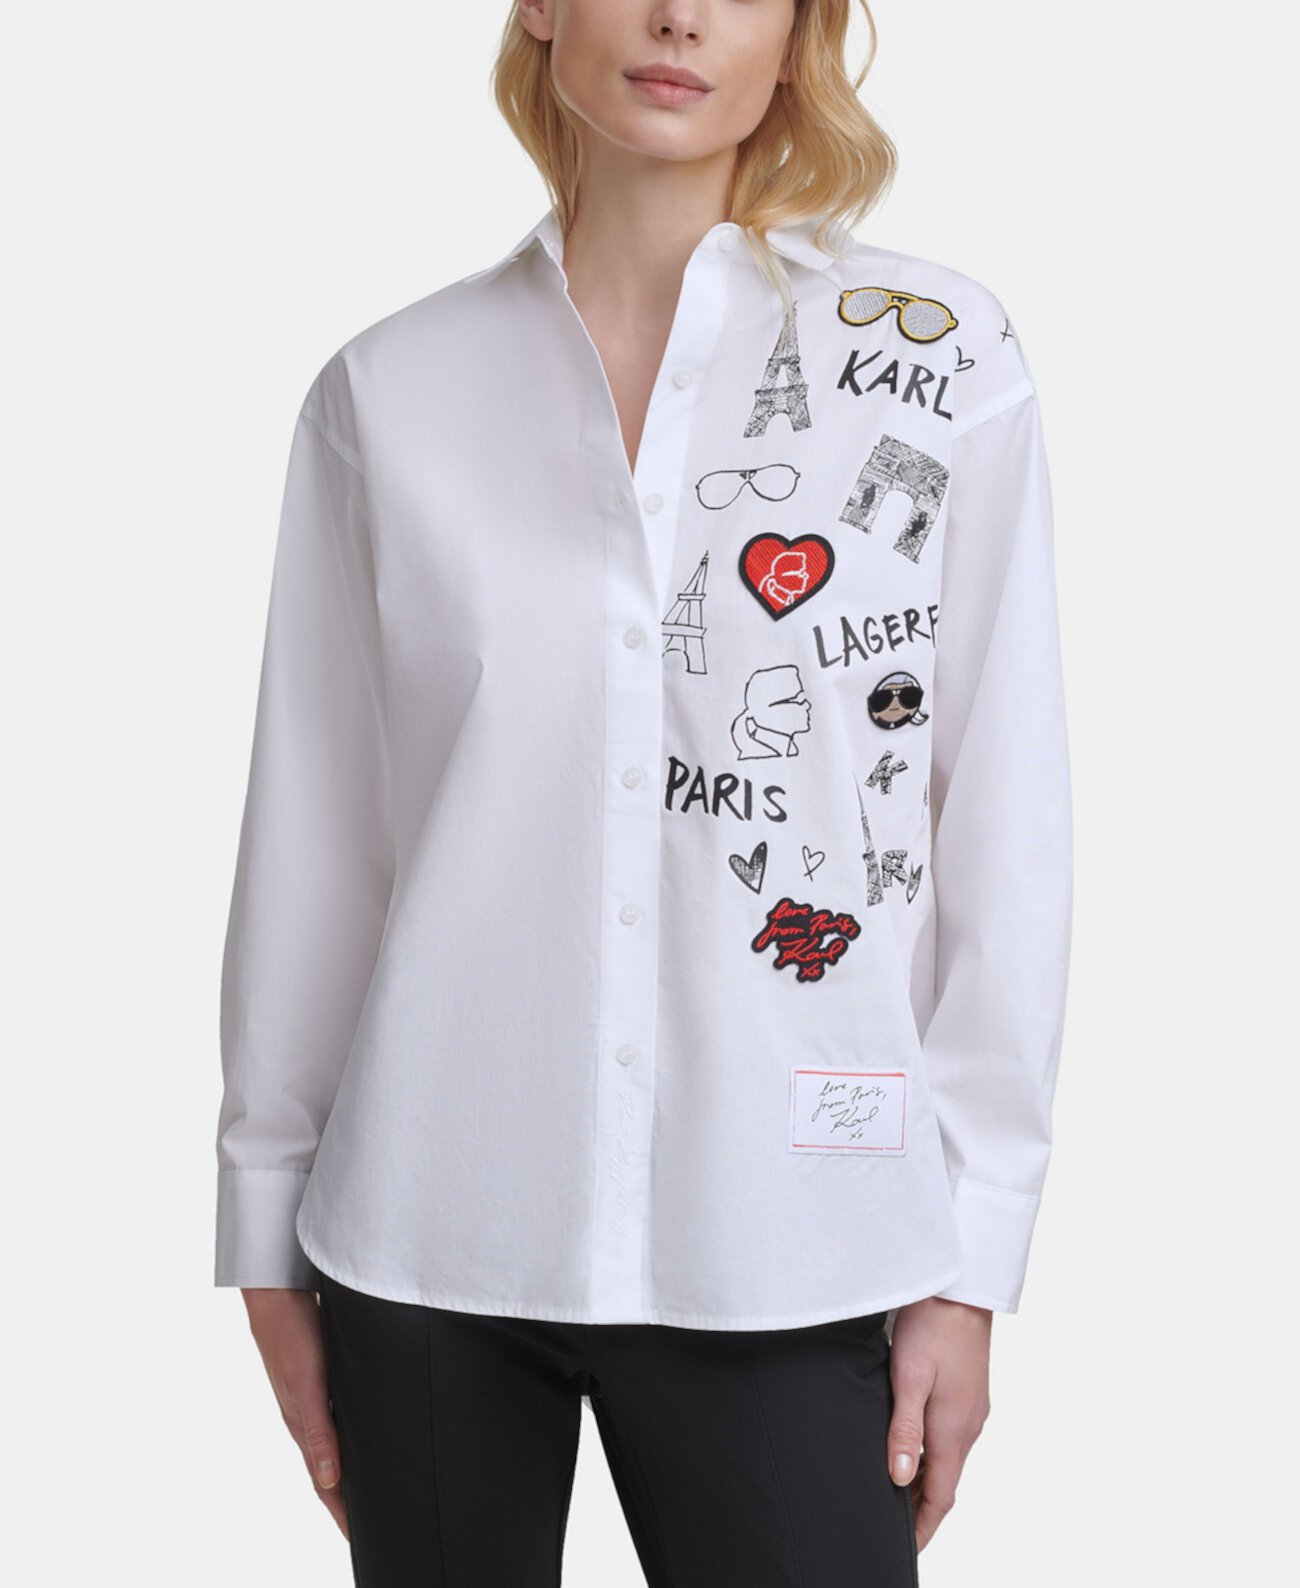 Рубашка с легендарным мотивом Karl Lagerfeld Paris